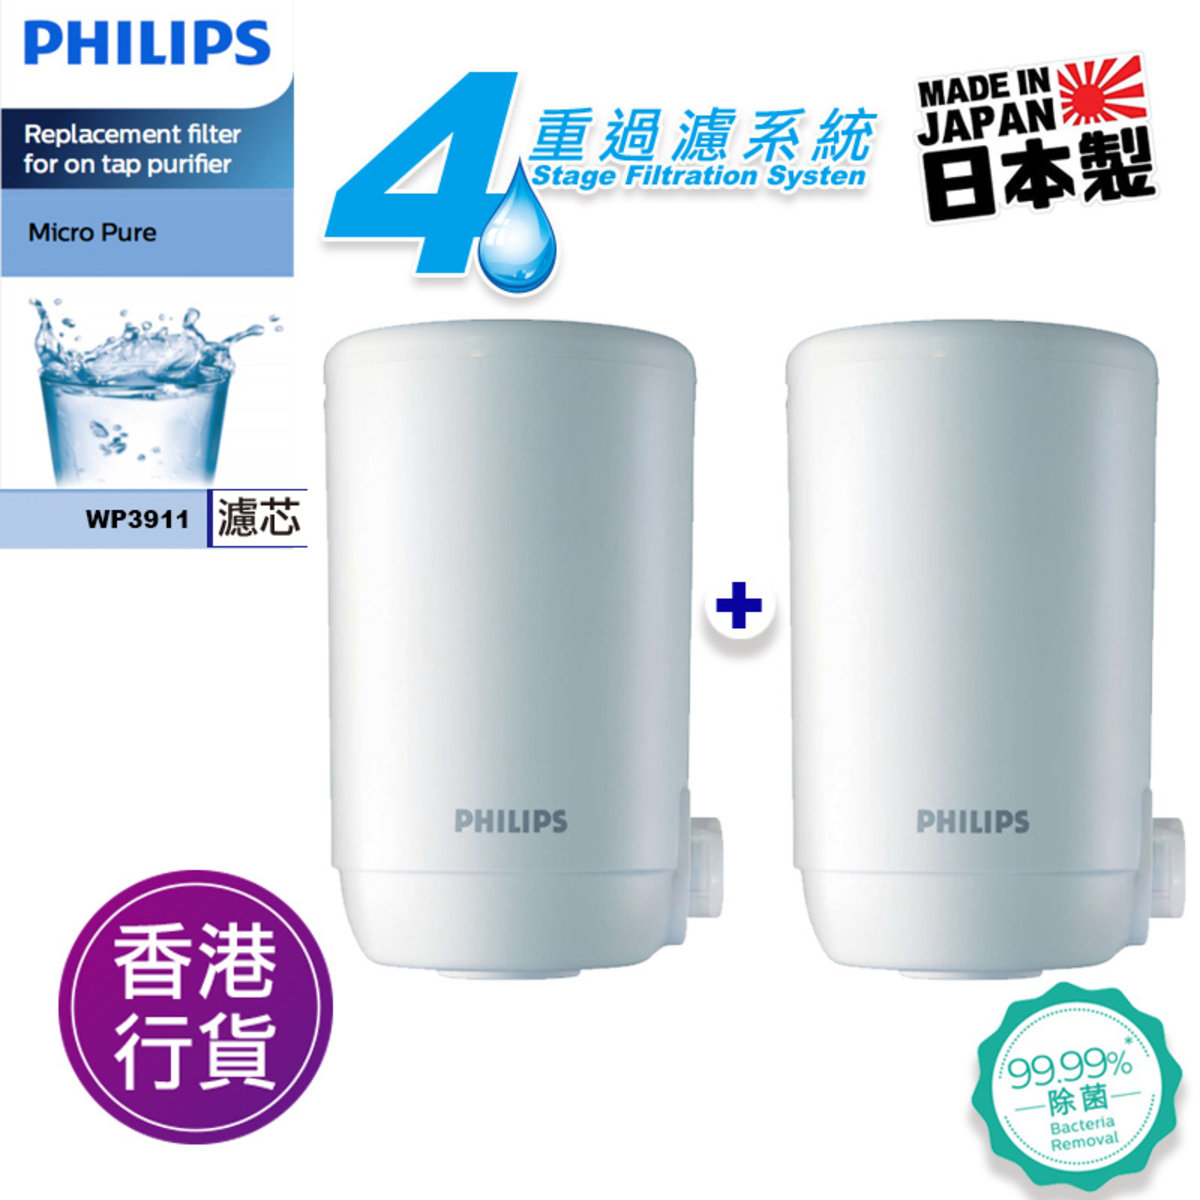 WP3911 faucet water filter replacement filter 2pcs